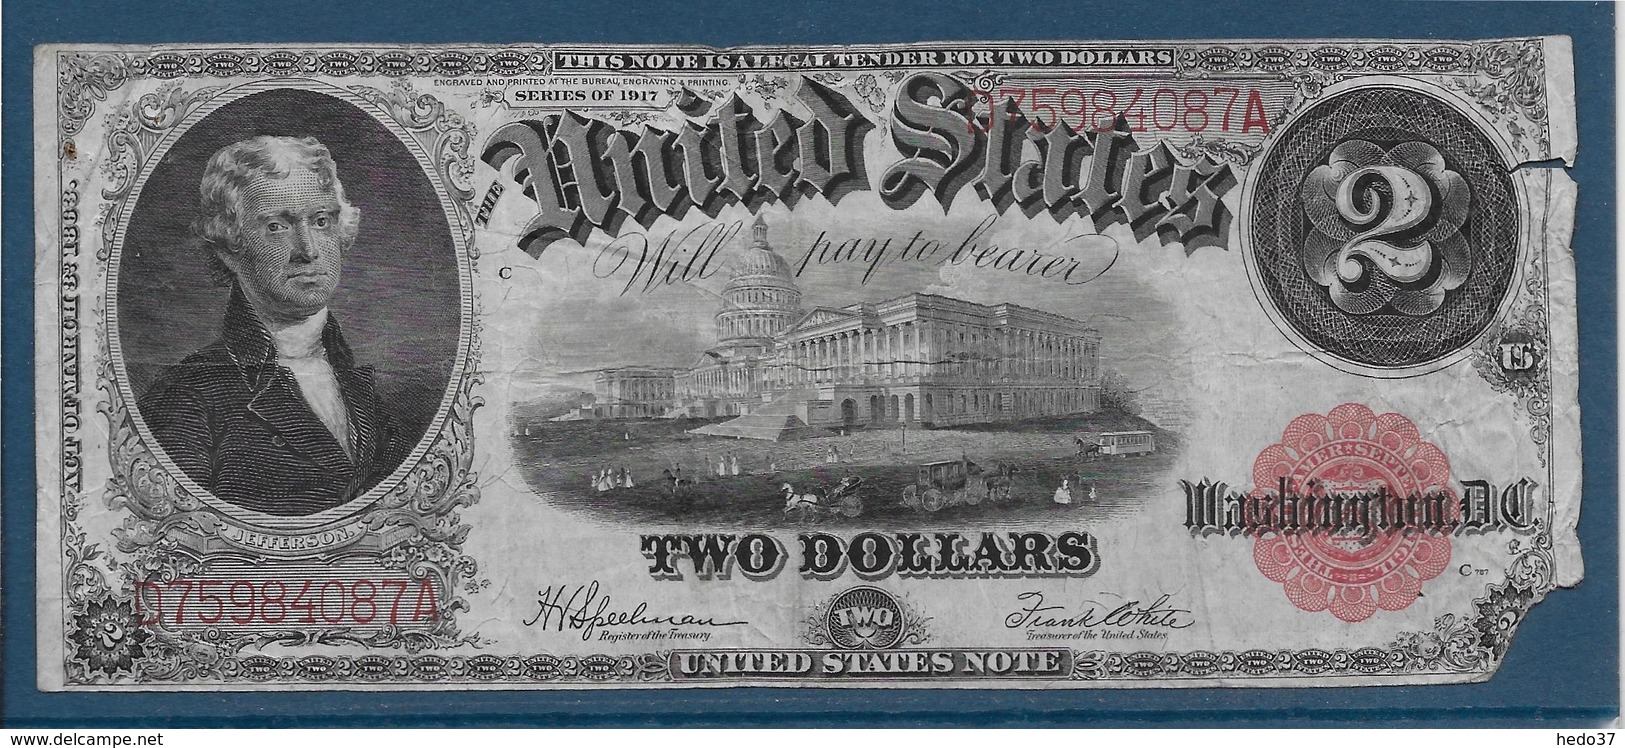 Etats Unis - 2 Dollars - 1917 - Pick N°188 - B - United States Notes (1862-1923)